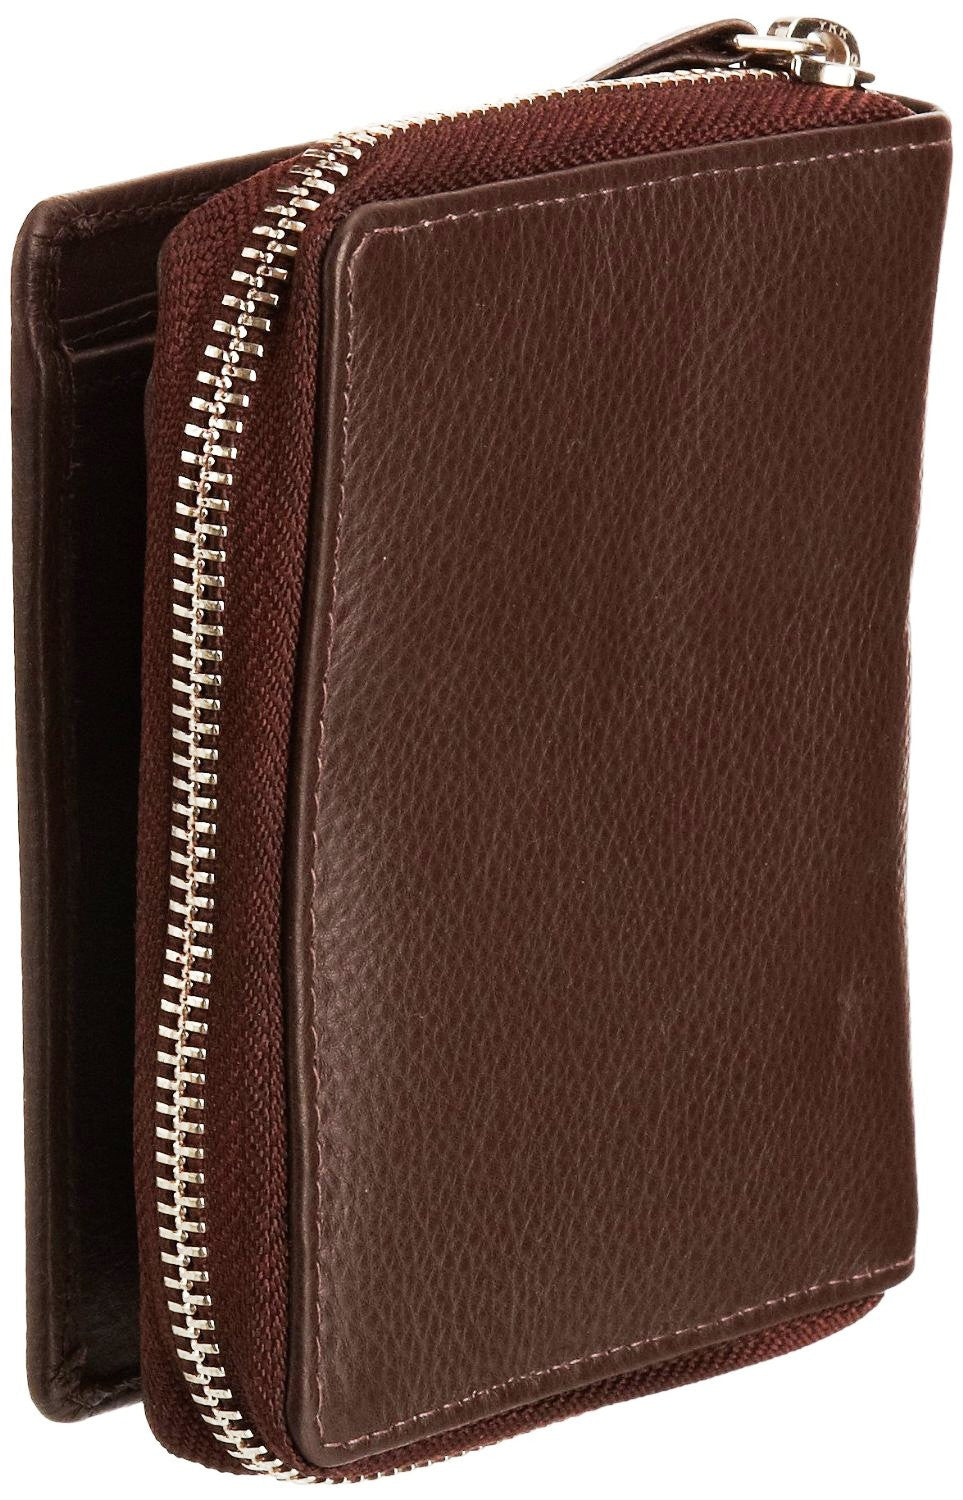 Pratico - women leather trifold wallet #LW01 Brown